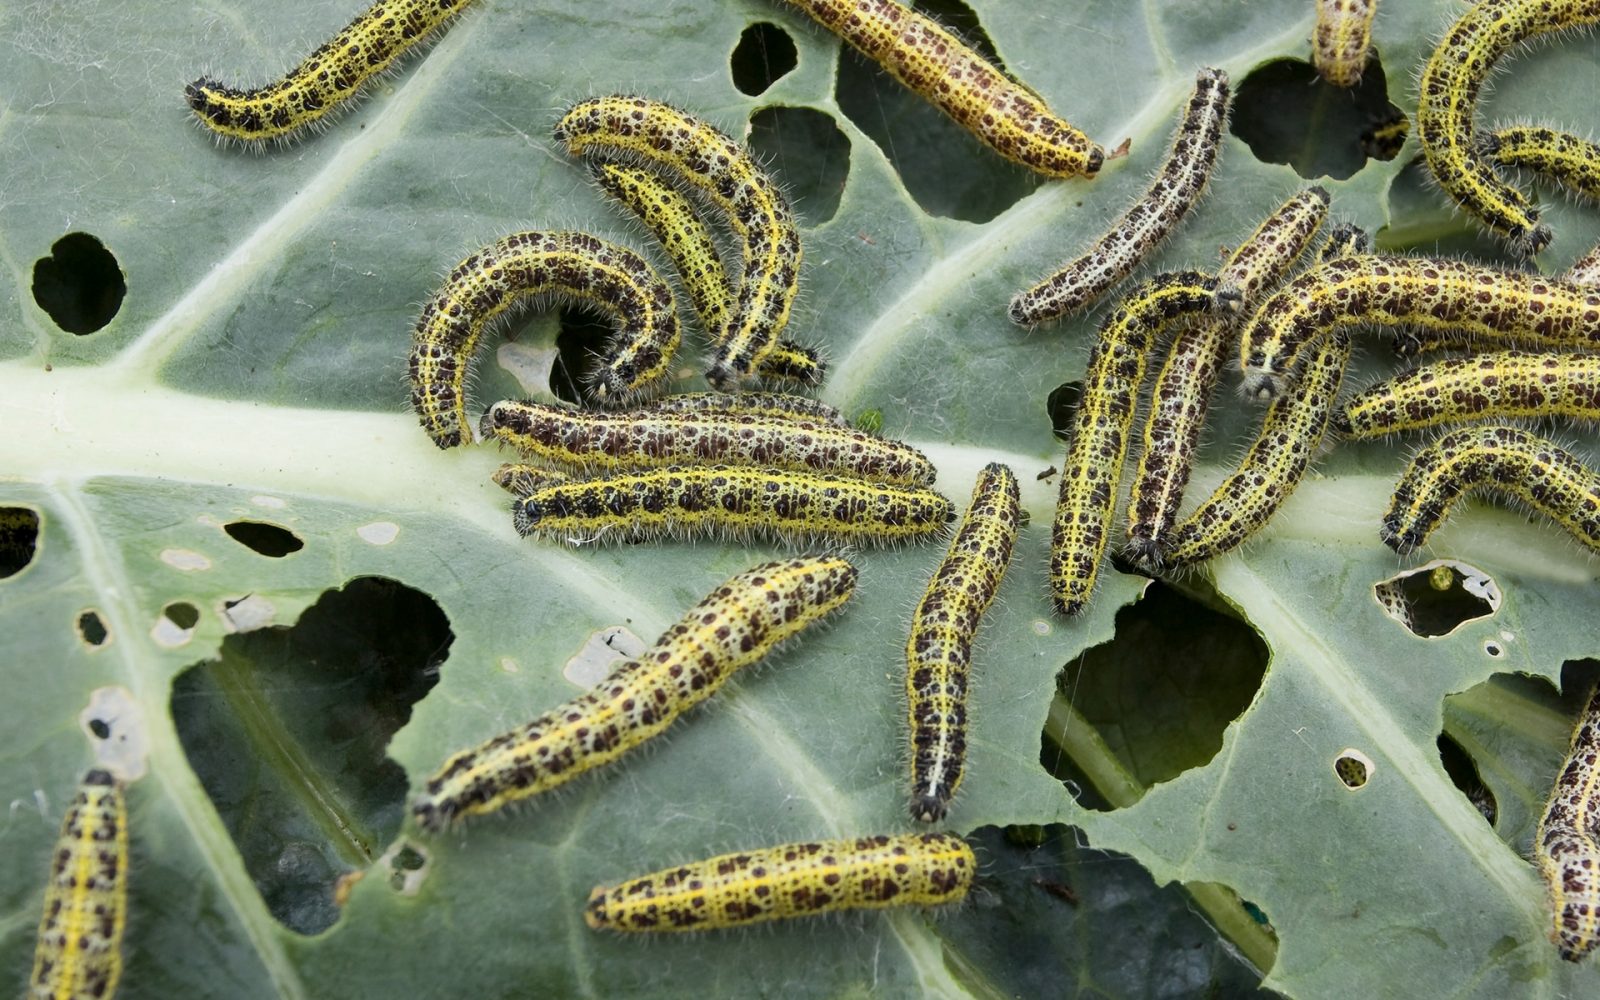 Many caterpillars feeding on cabbage